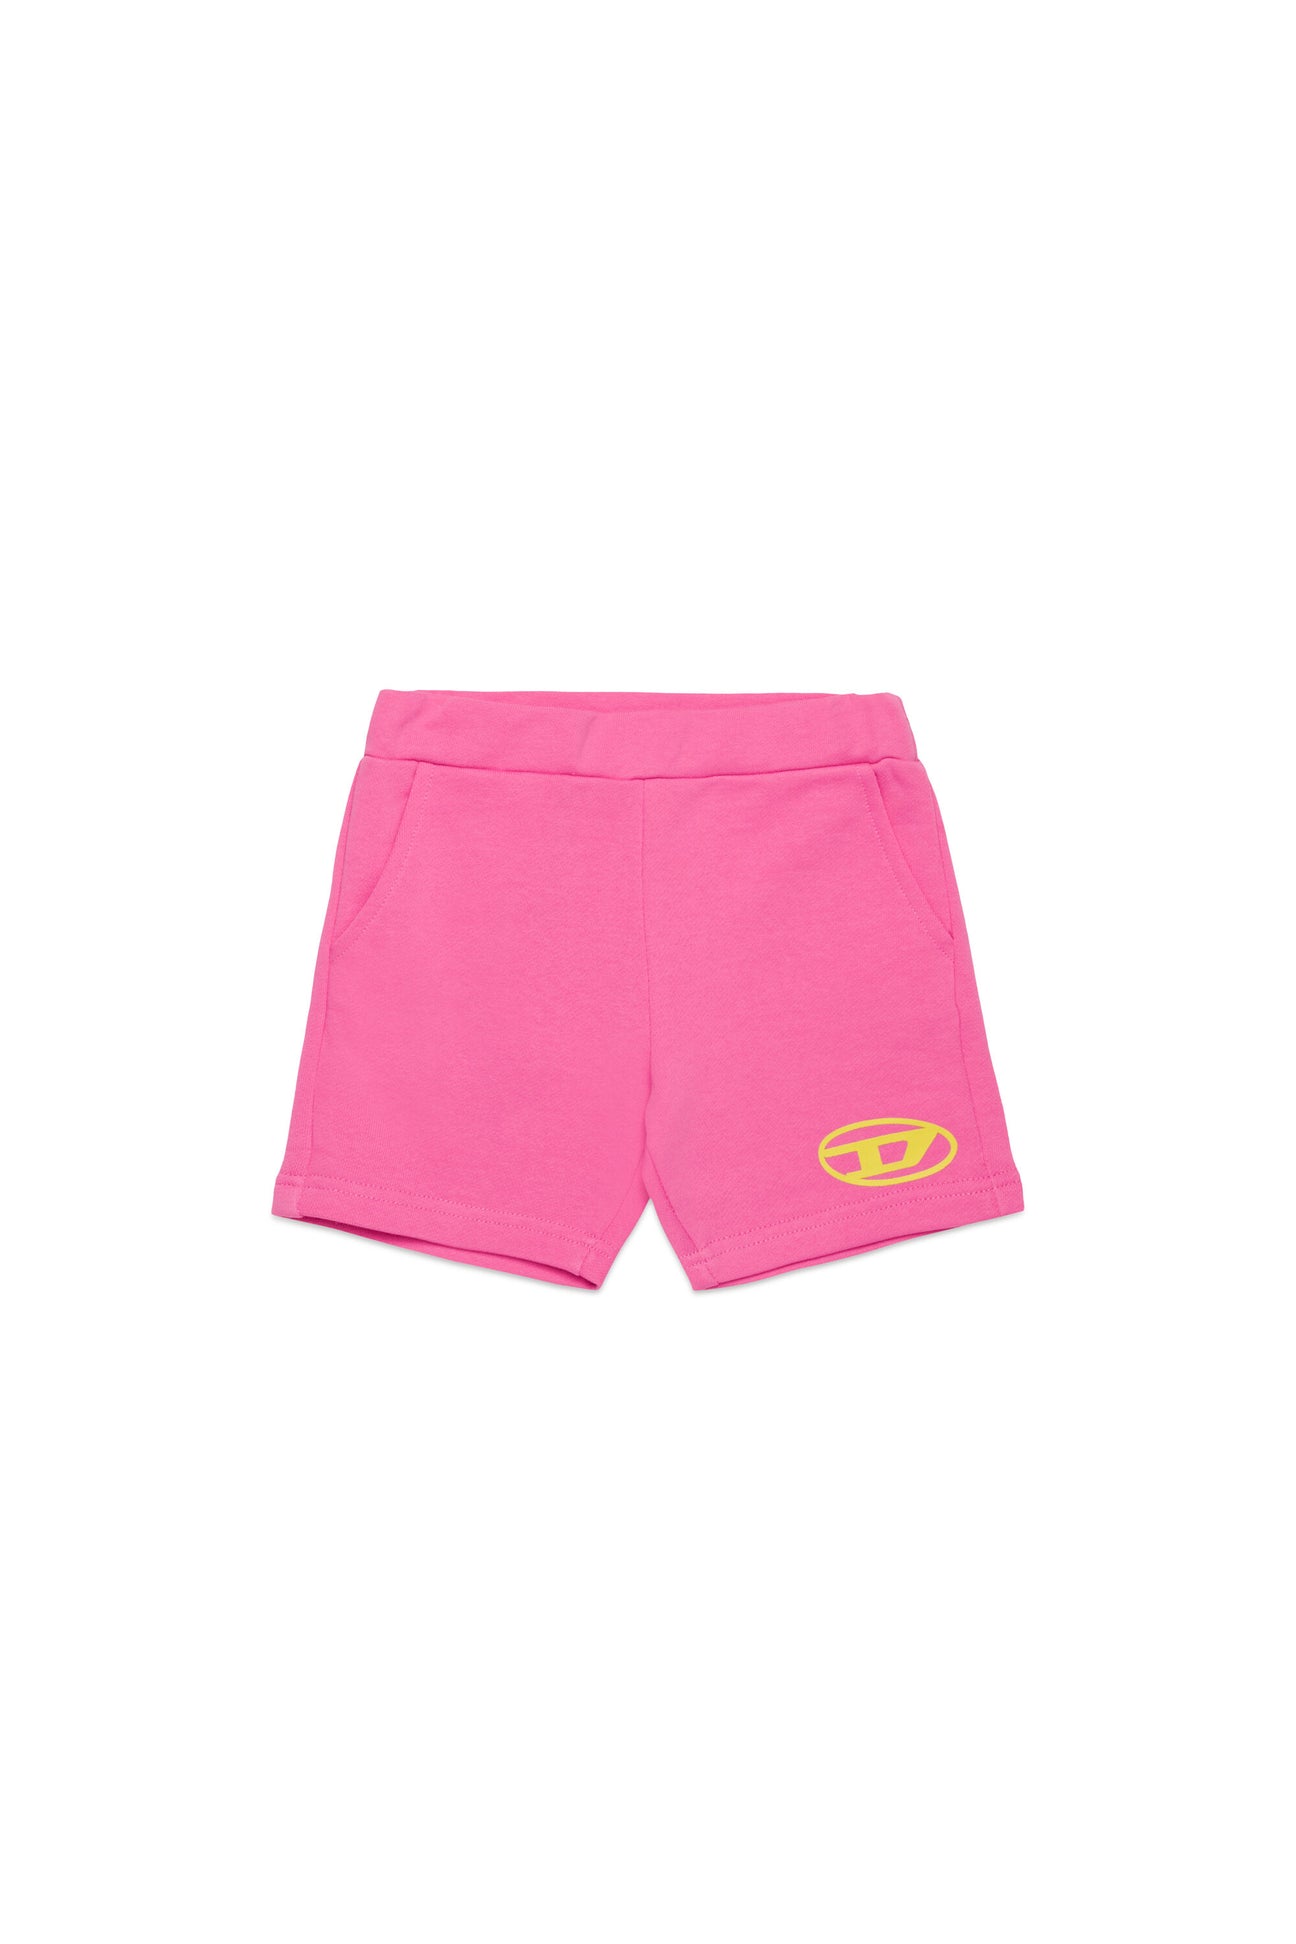 Fleece shorts with Oval D logo 